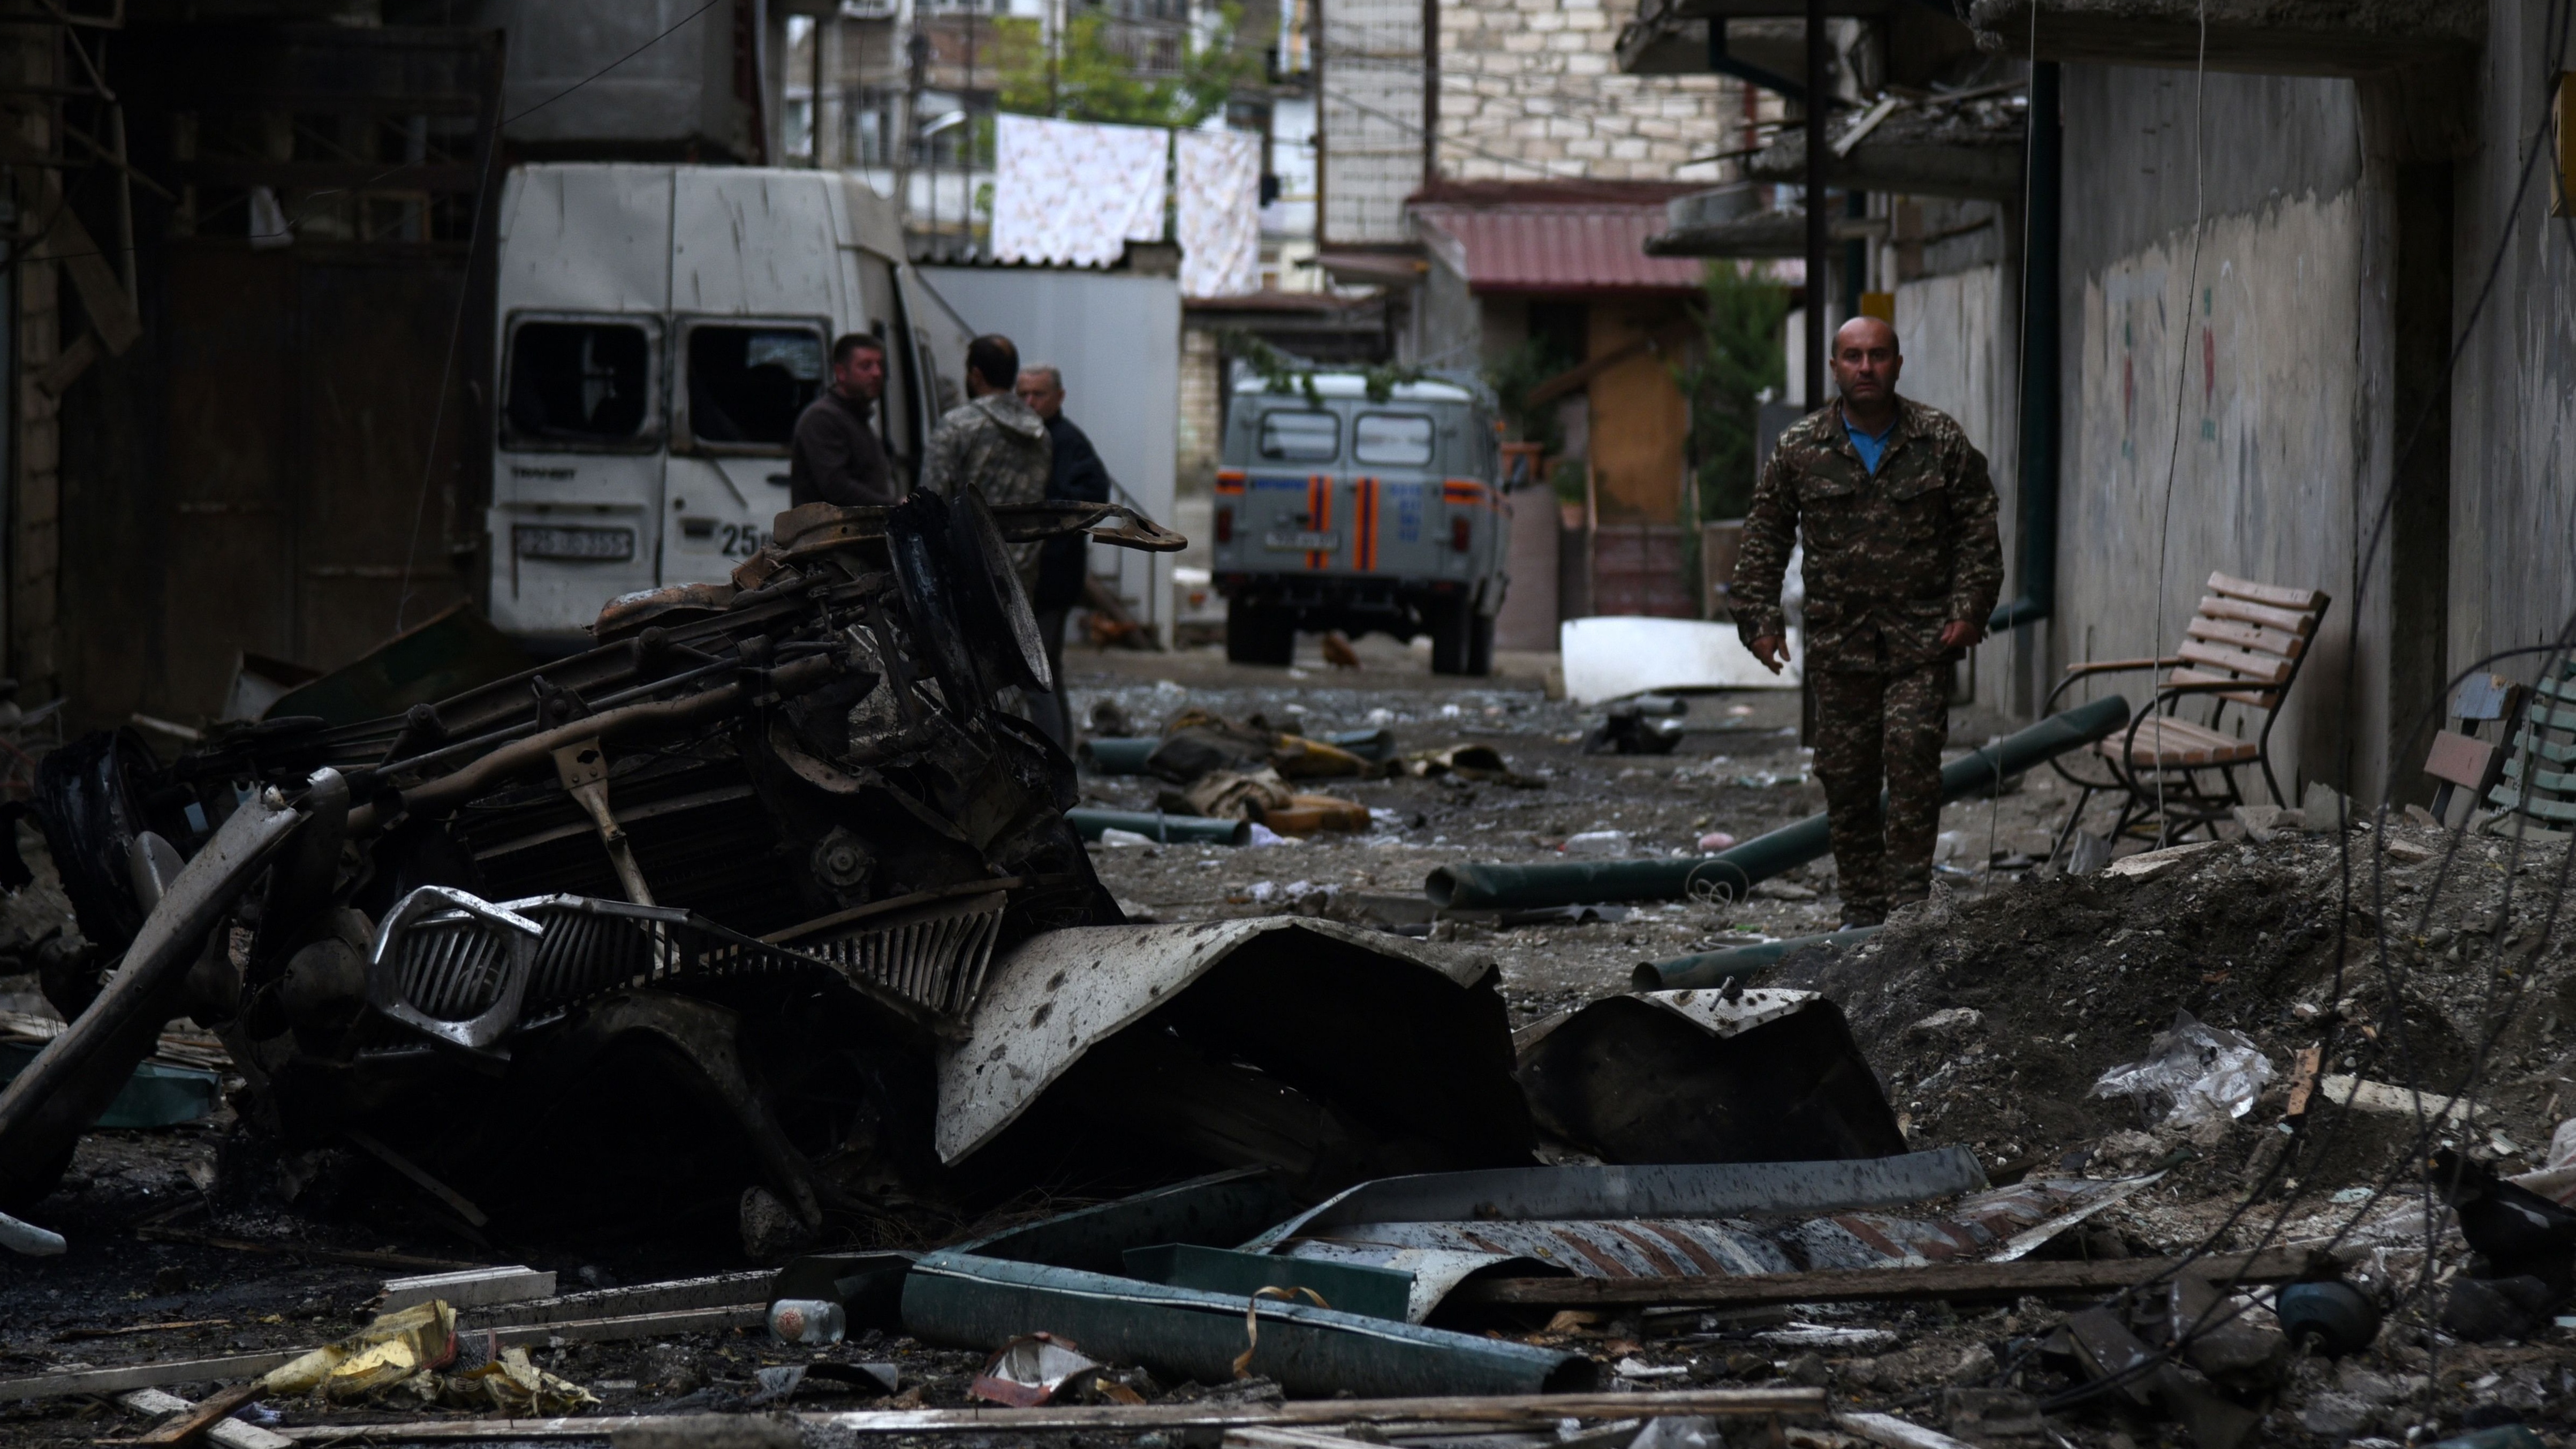 The aftermath of shelling in Stepanakert, Nagorno-Karabakh